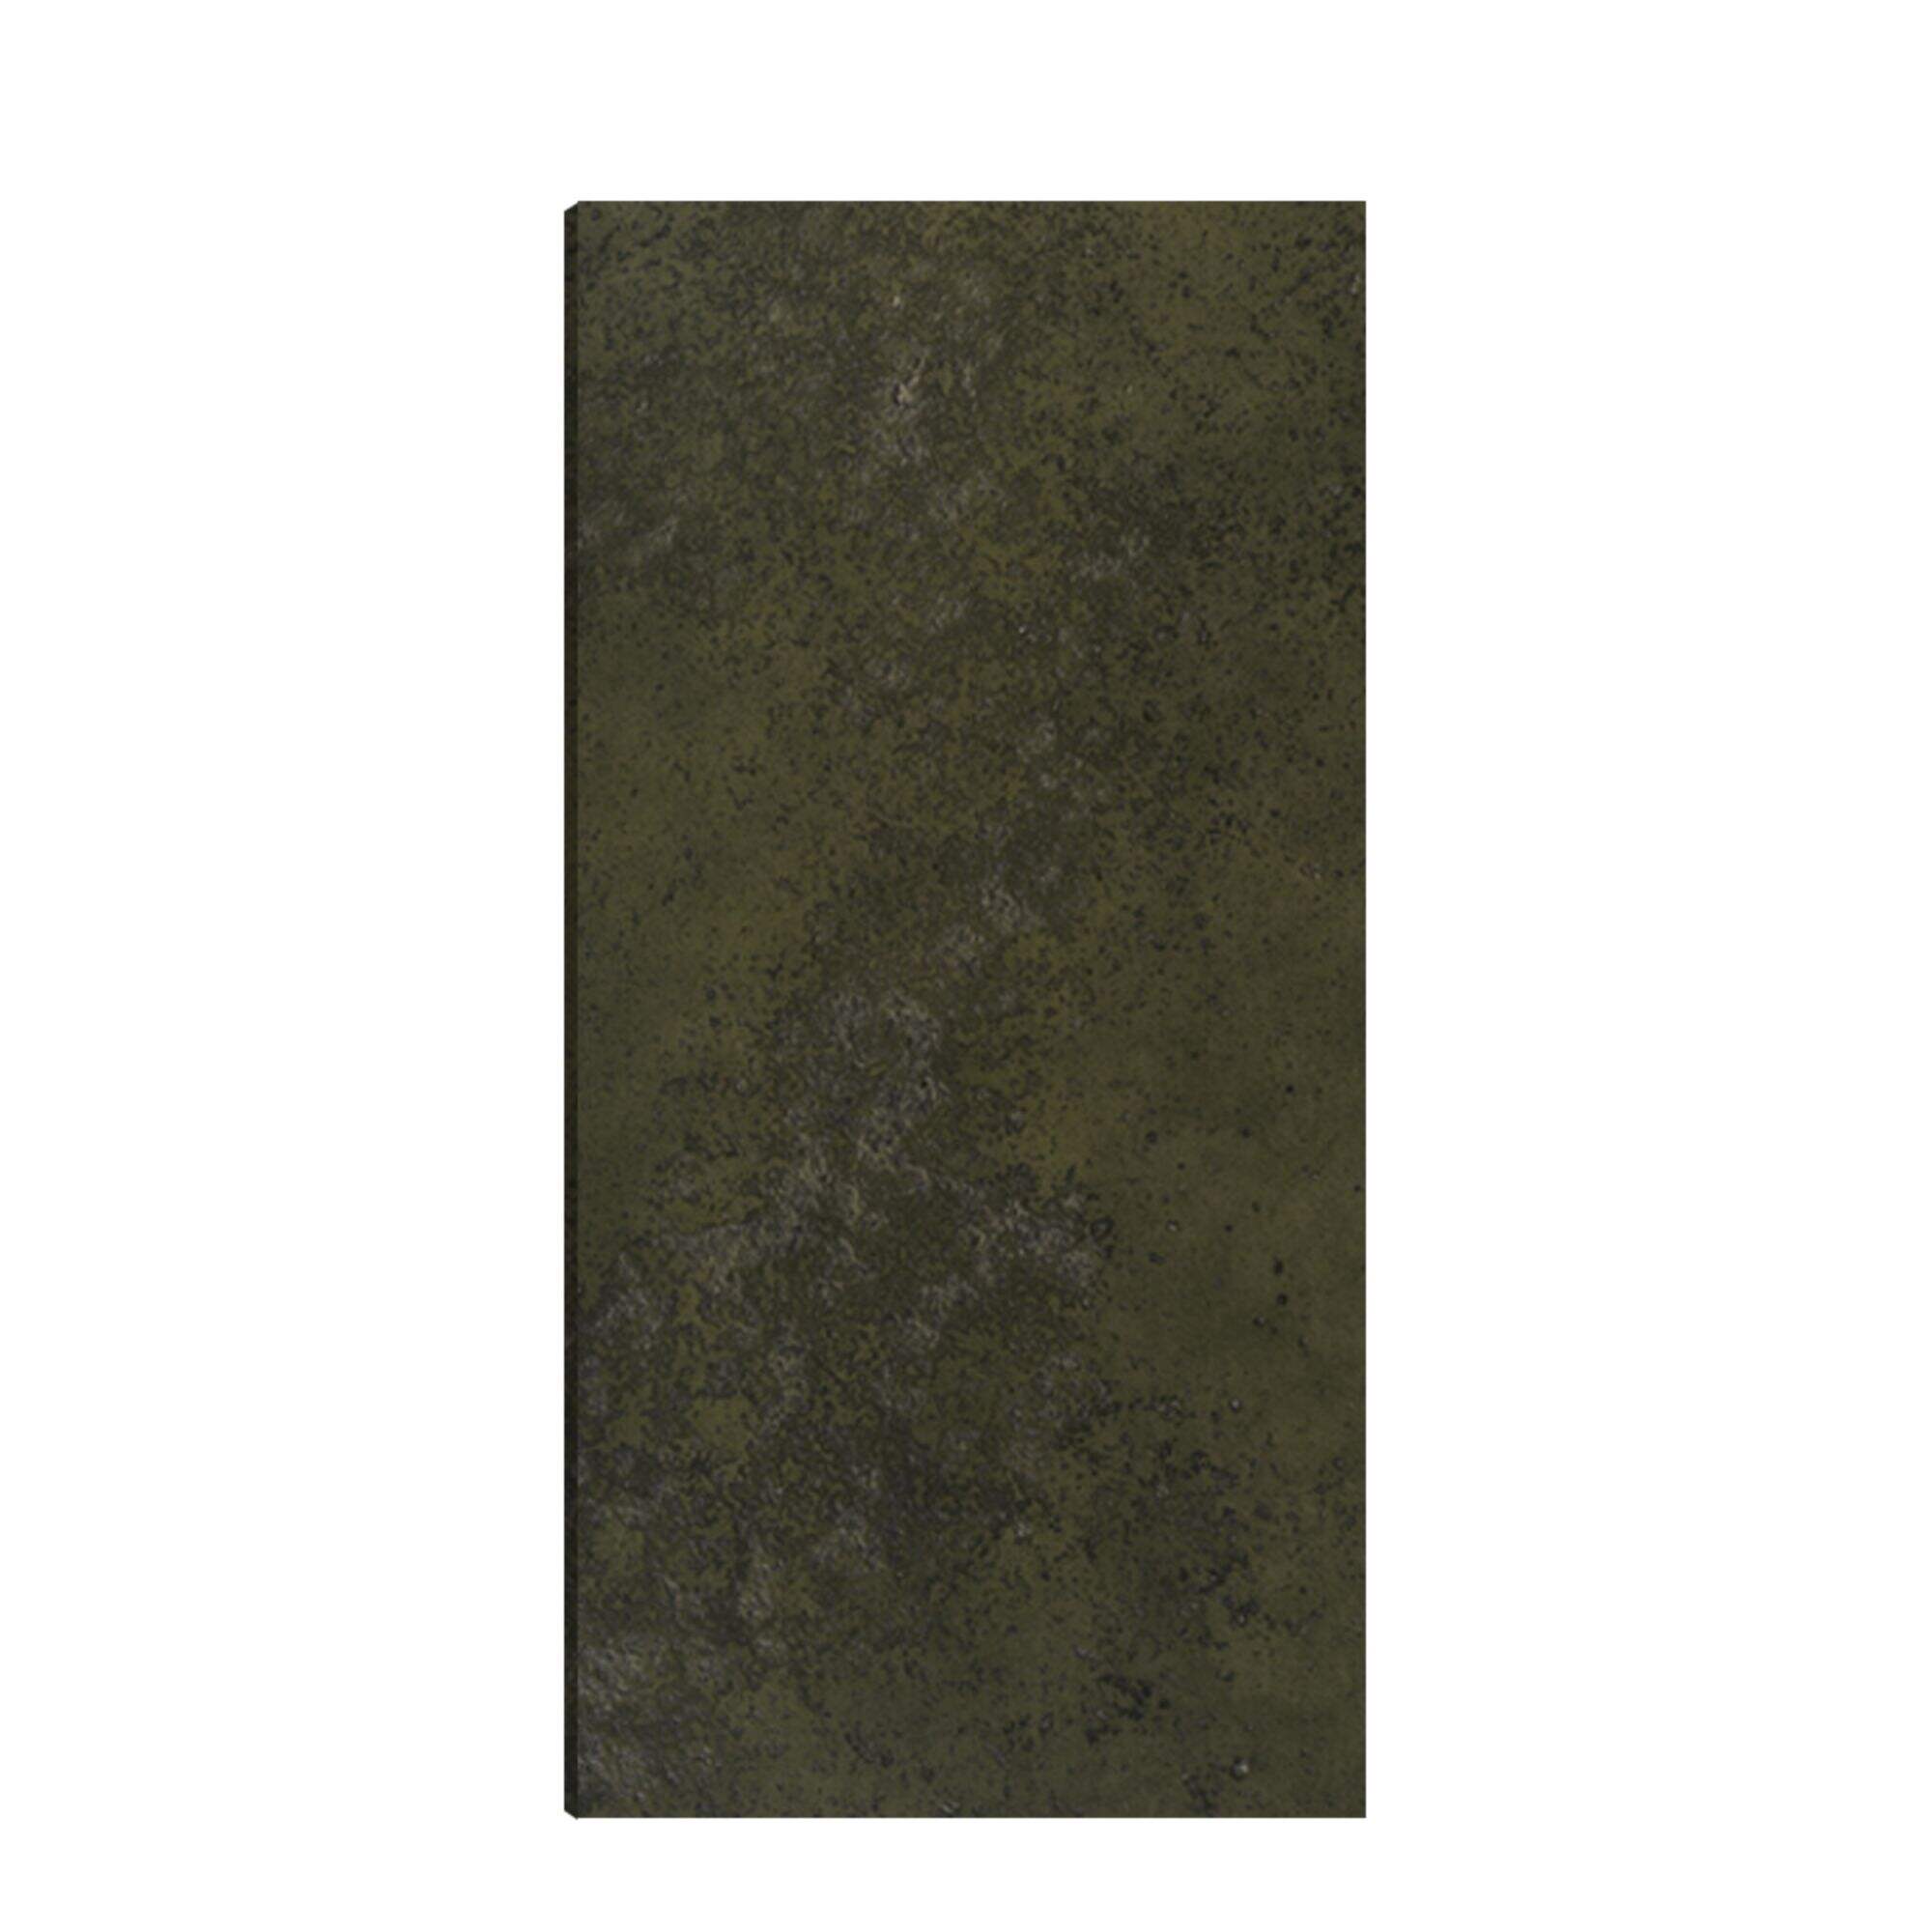 Moss Green Gilt Sandstone Cement Board